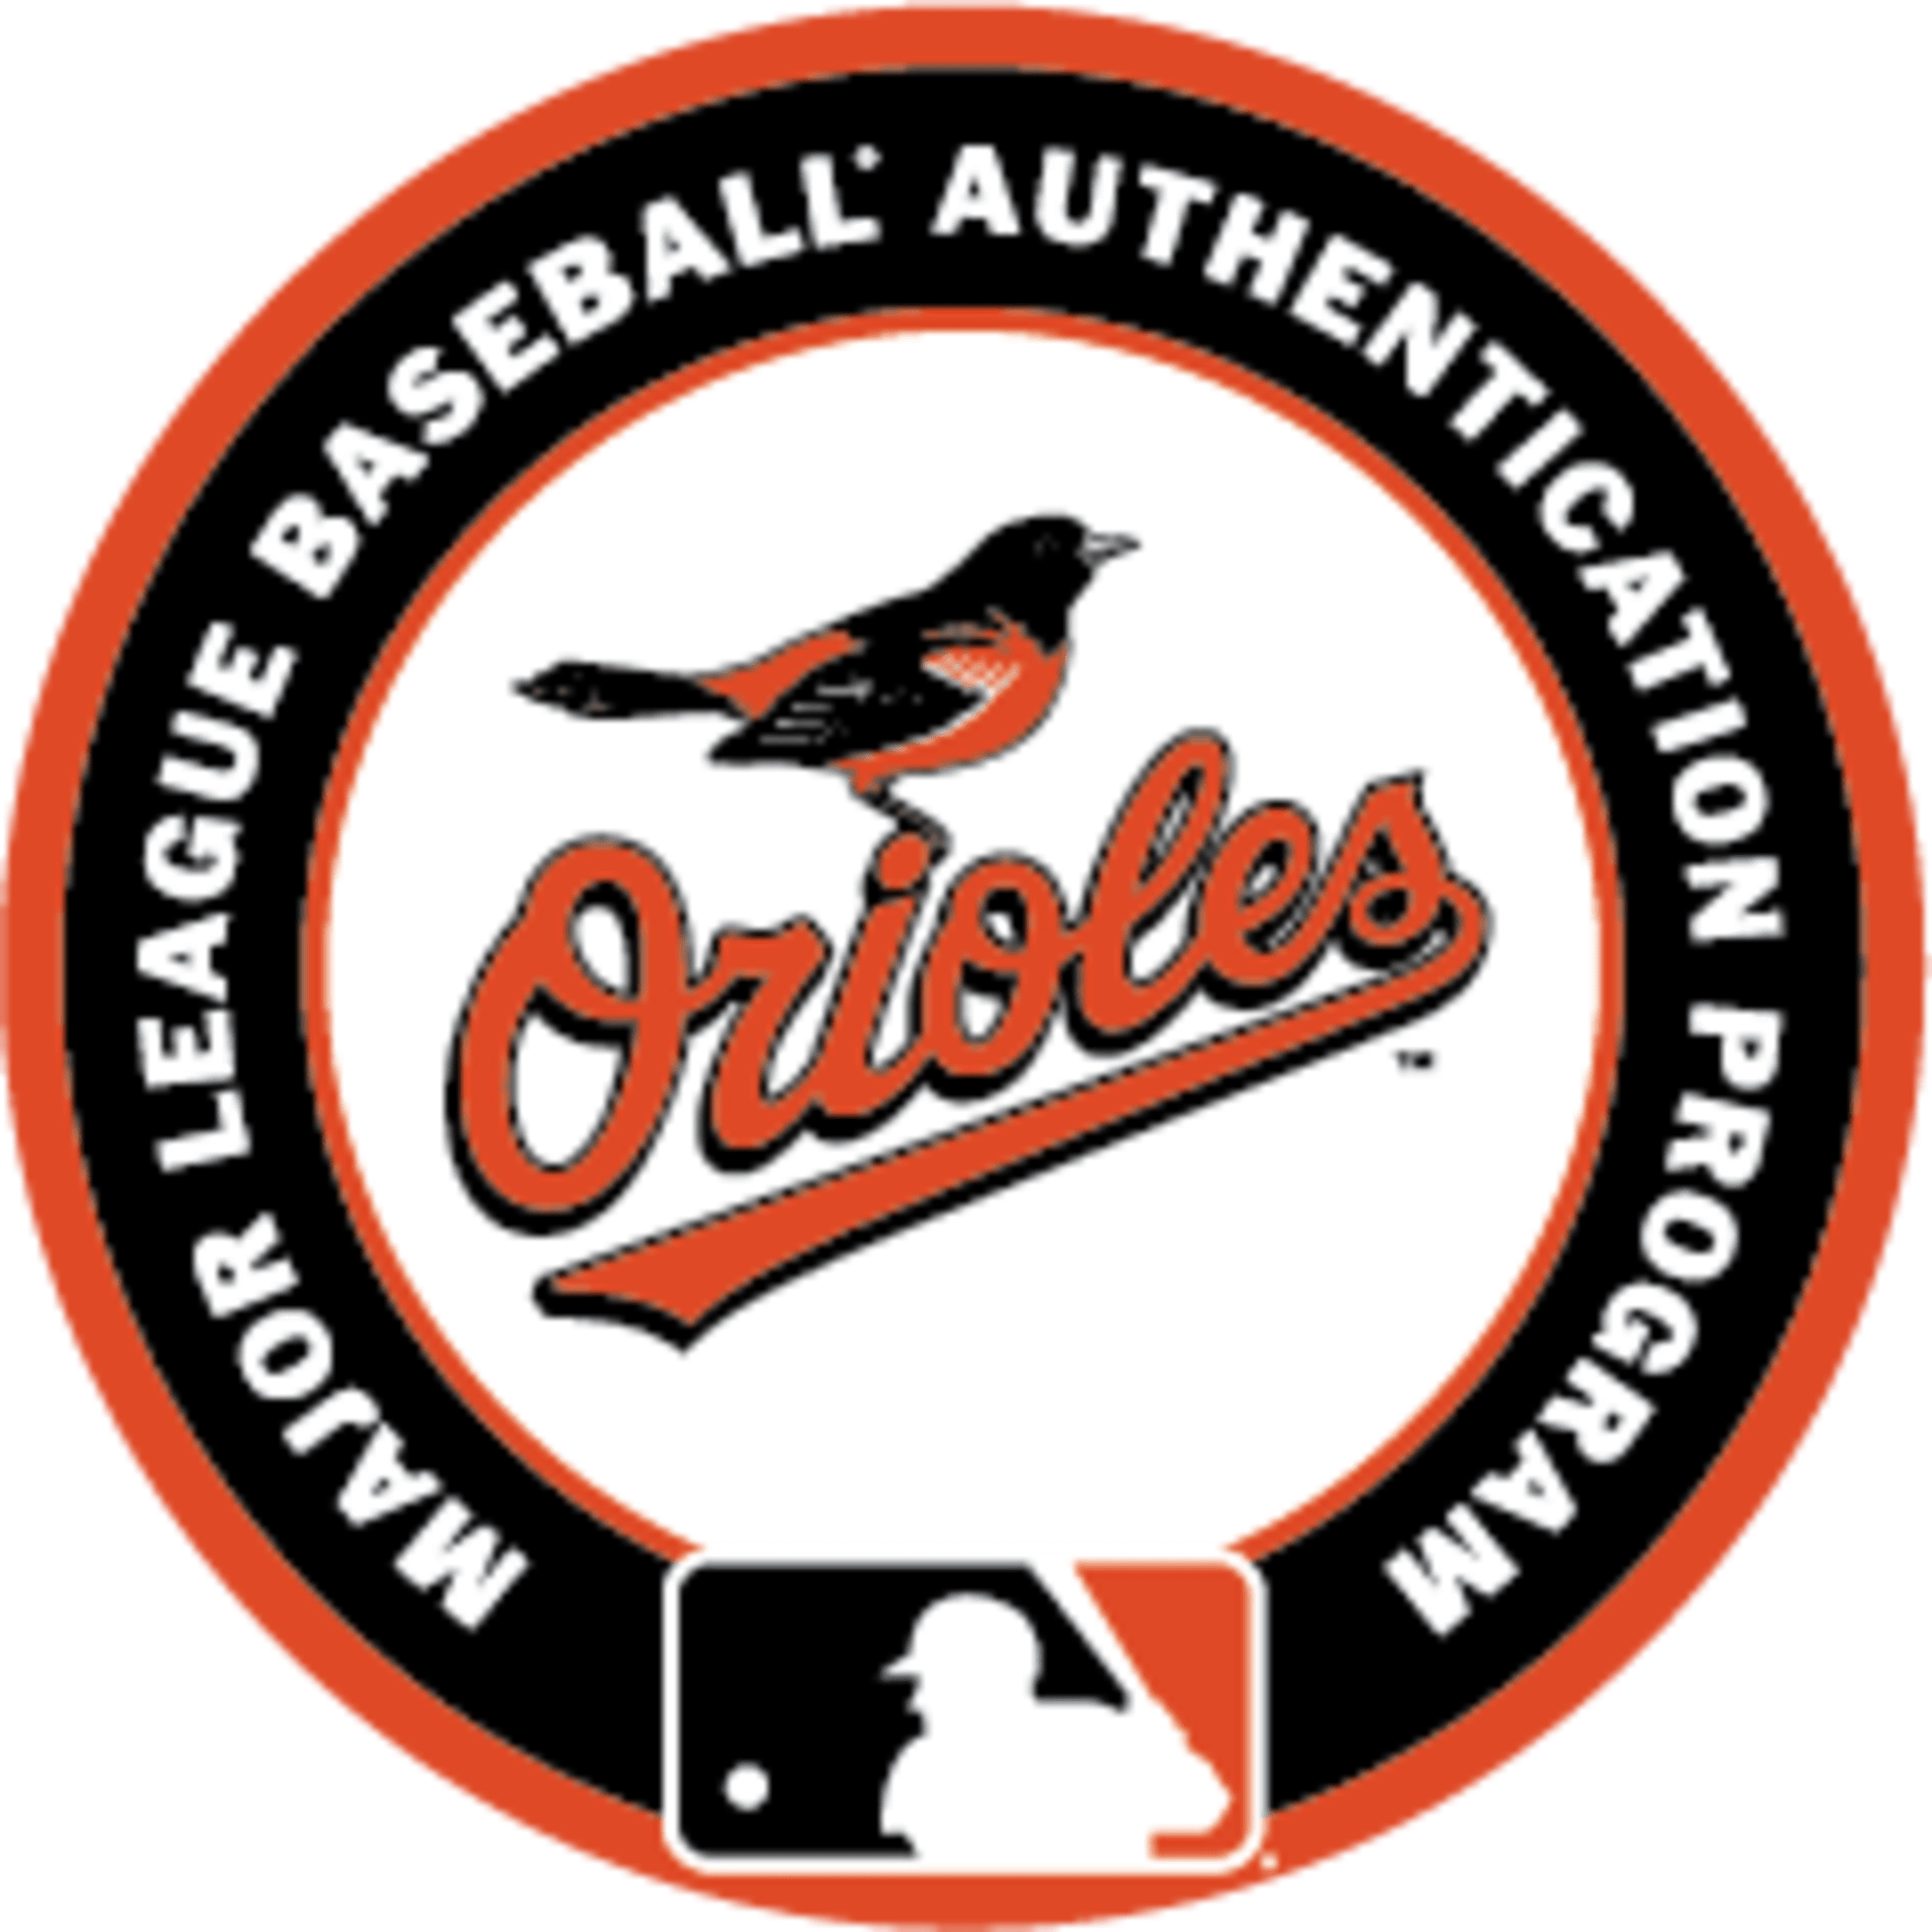 MLB Authentication Program 